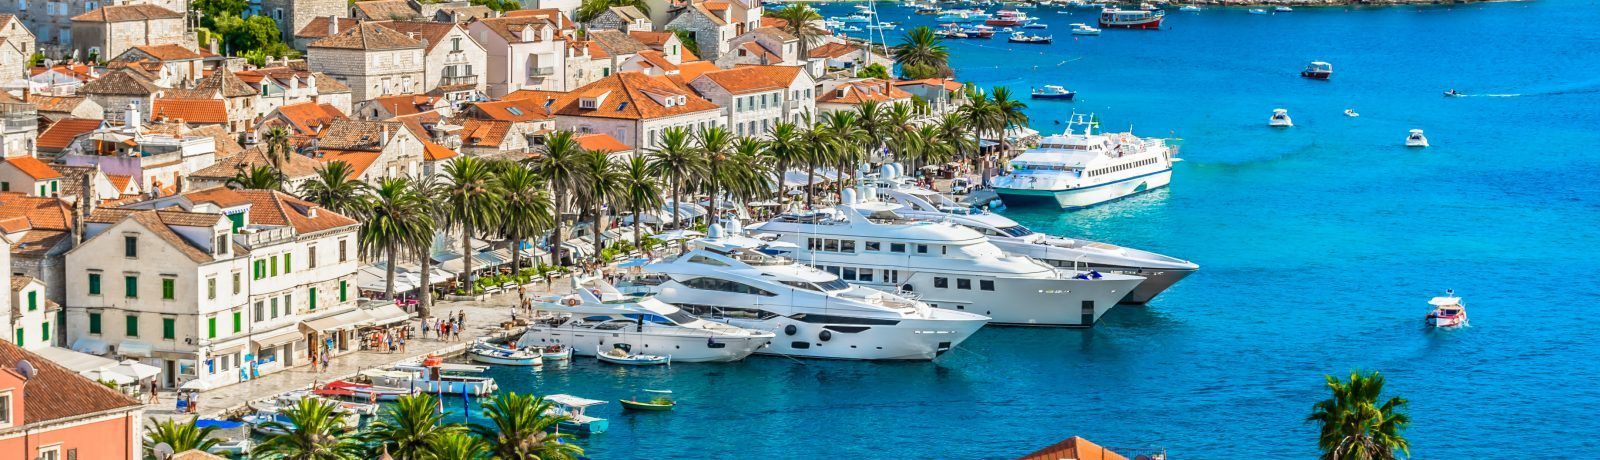 Hvar Luxury Yacht Charter Guide Iyc